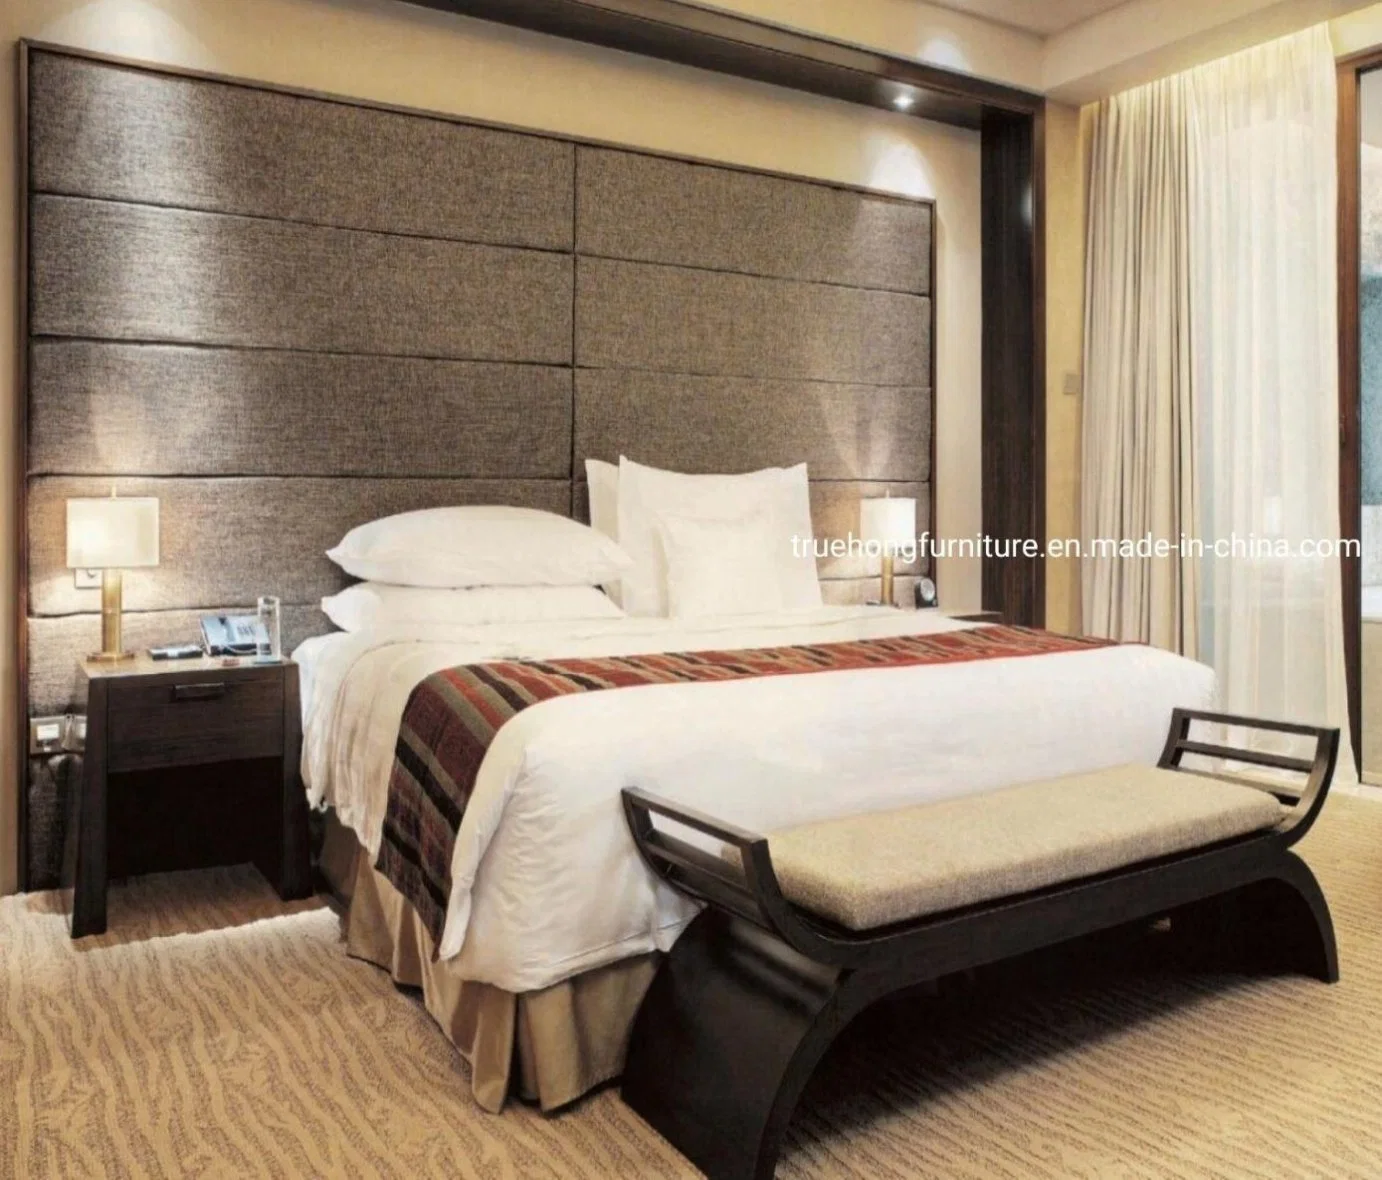 5 Star Hotel Furniture Professional Customized Hotel Bedroom Furniture Set